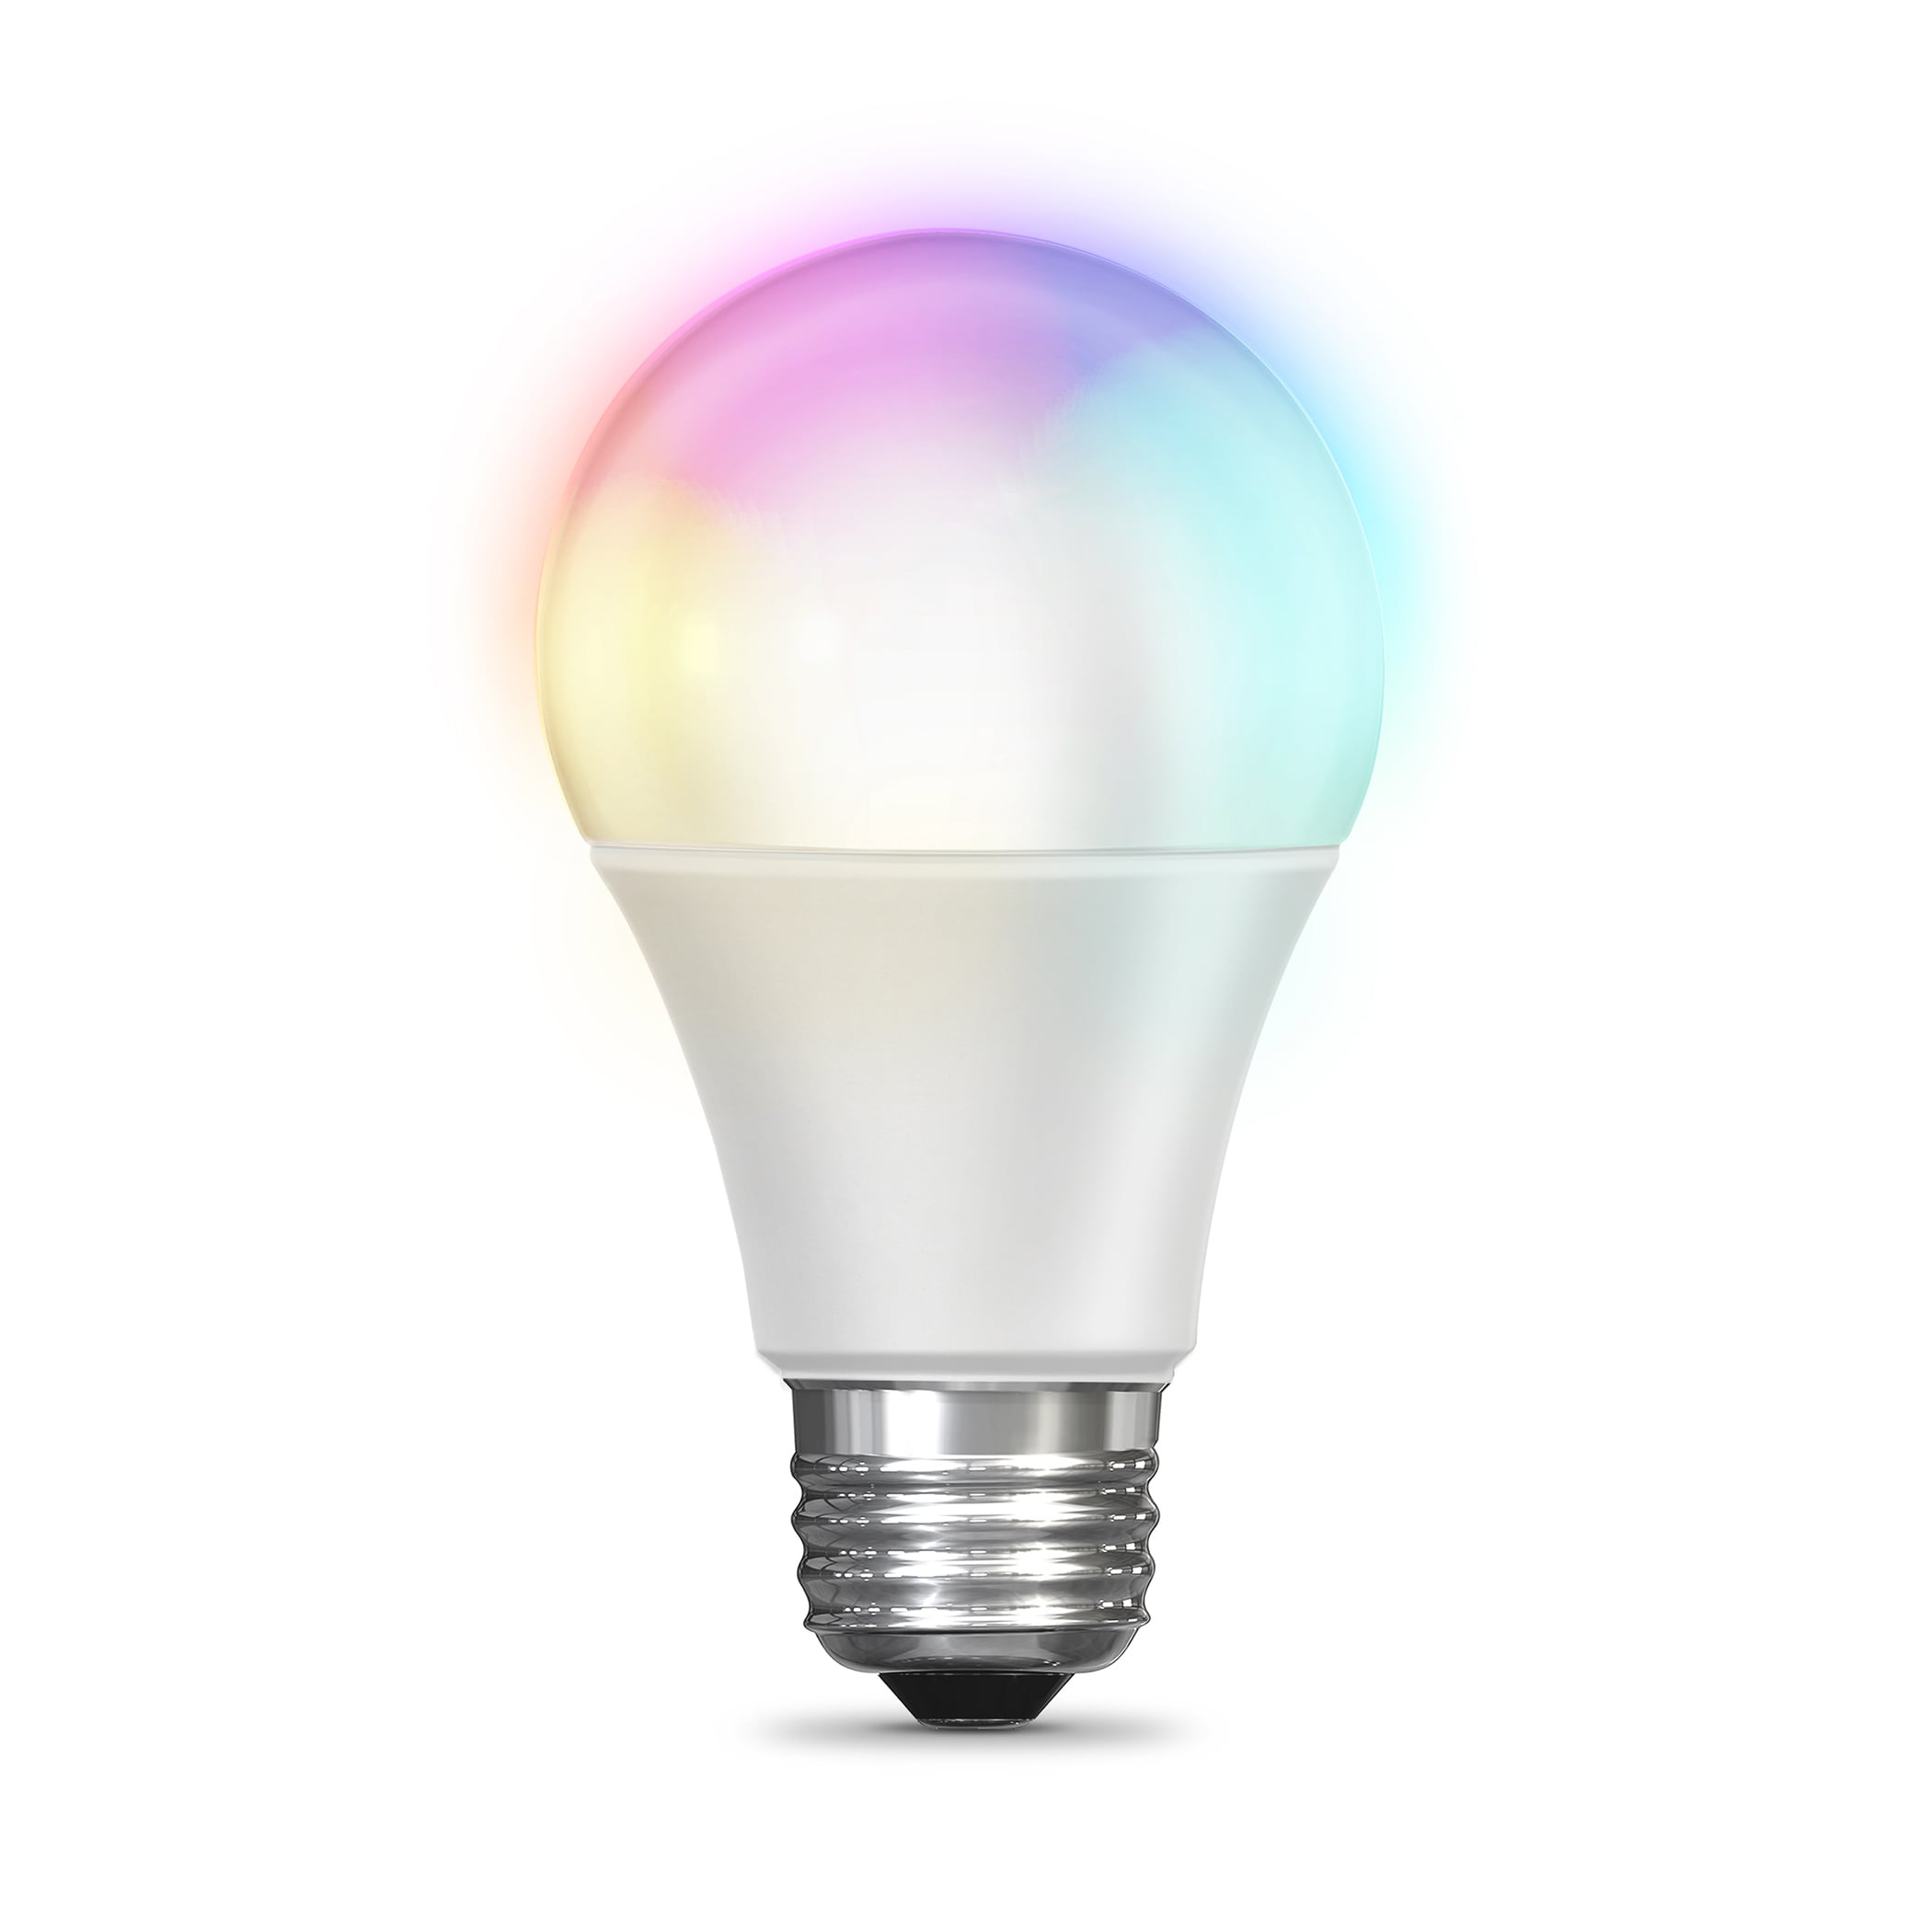 Wi-Fi Smart LED Light Bulb 100W 12W 1100LM A21 RGBCW Dimmable Alexa/Google/Siri 